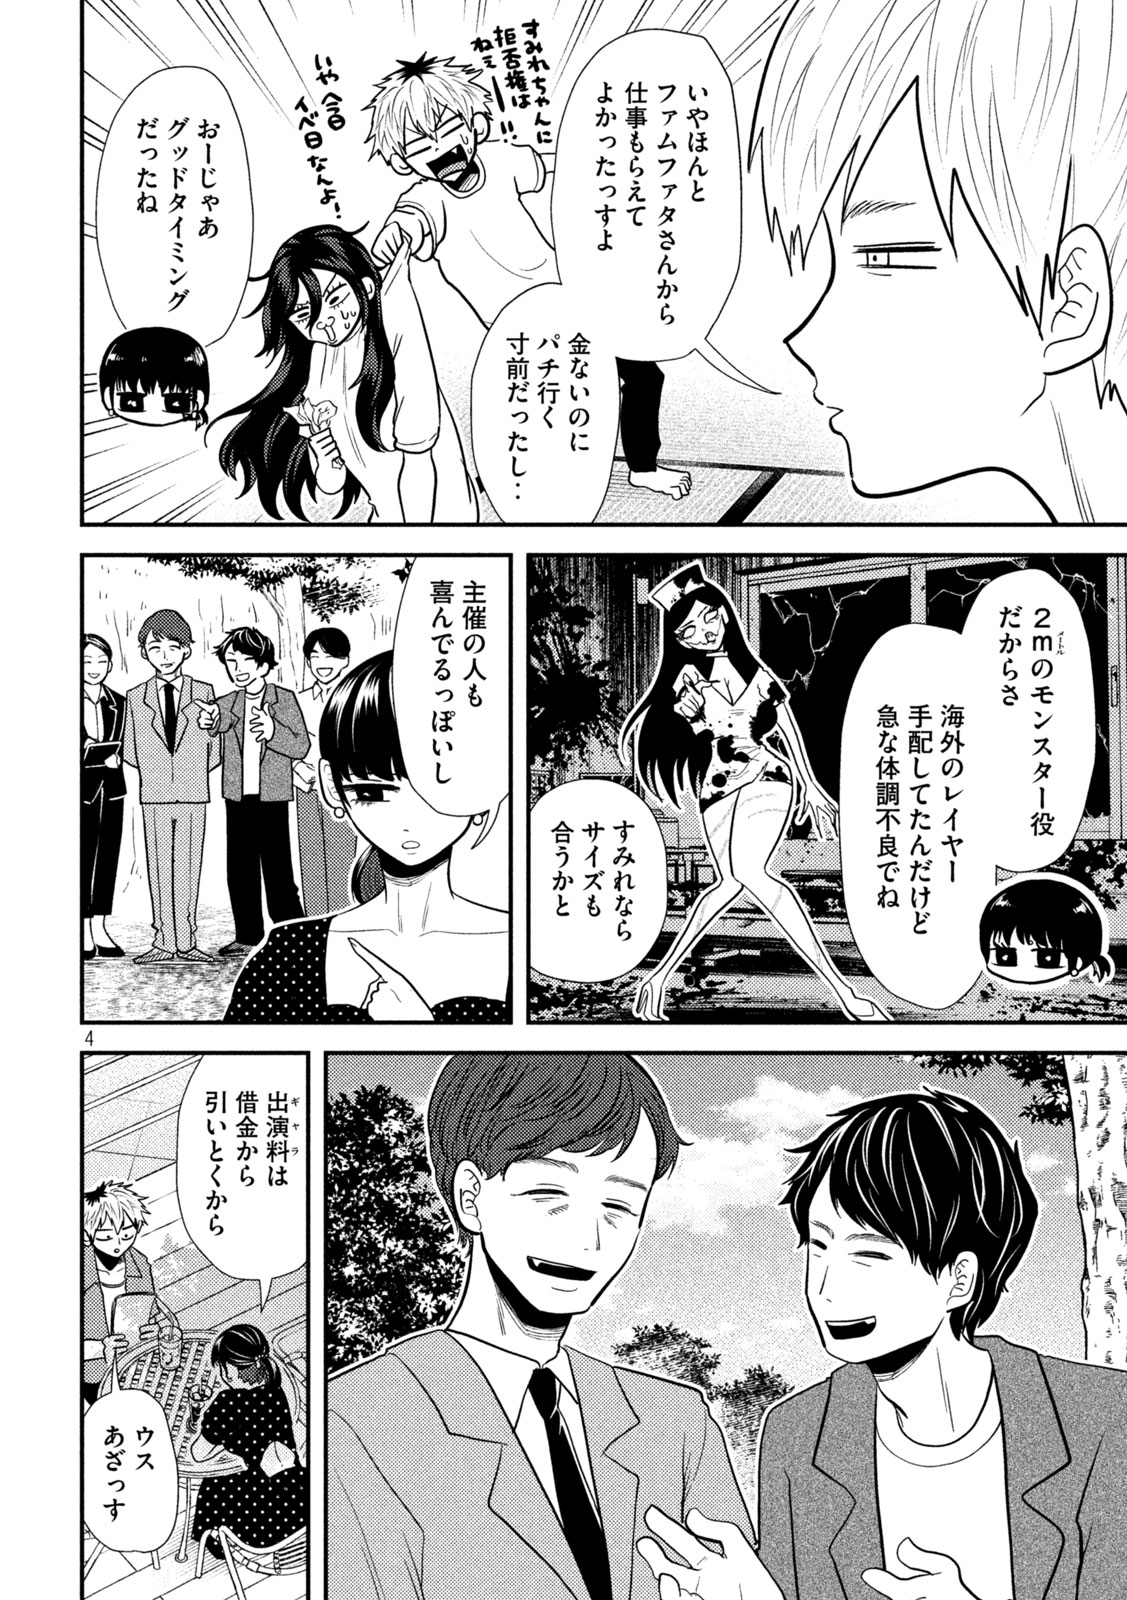 Heisei Haizanhei Sumire-chan - Chapter 22 - Page 4